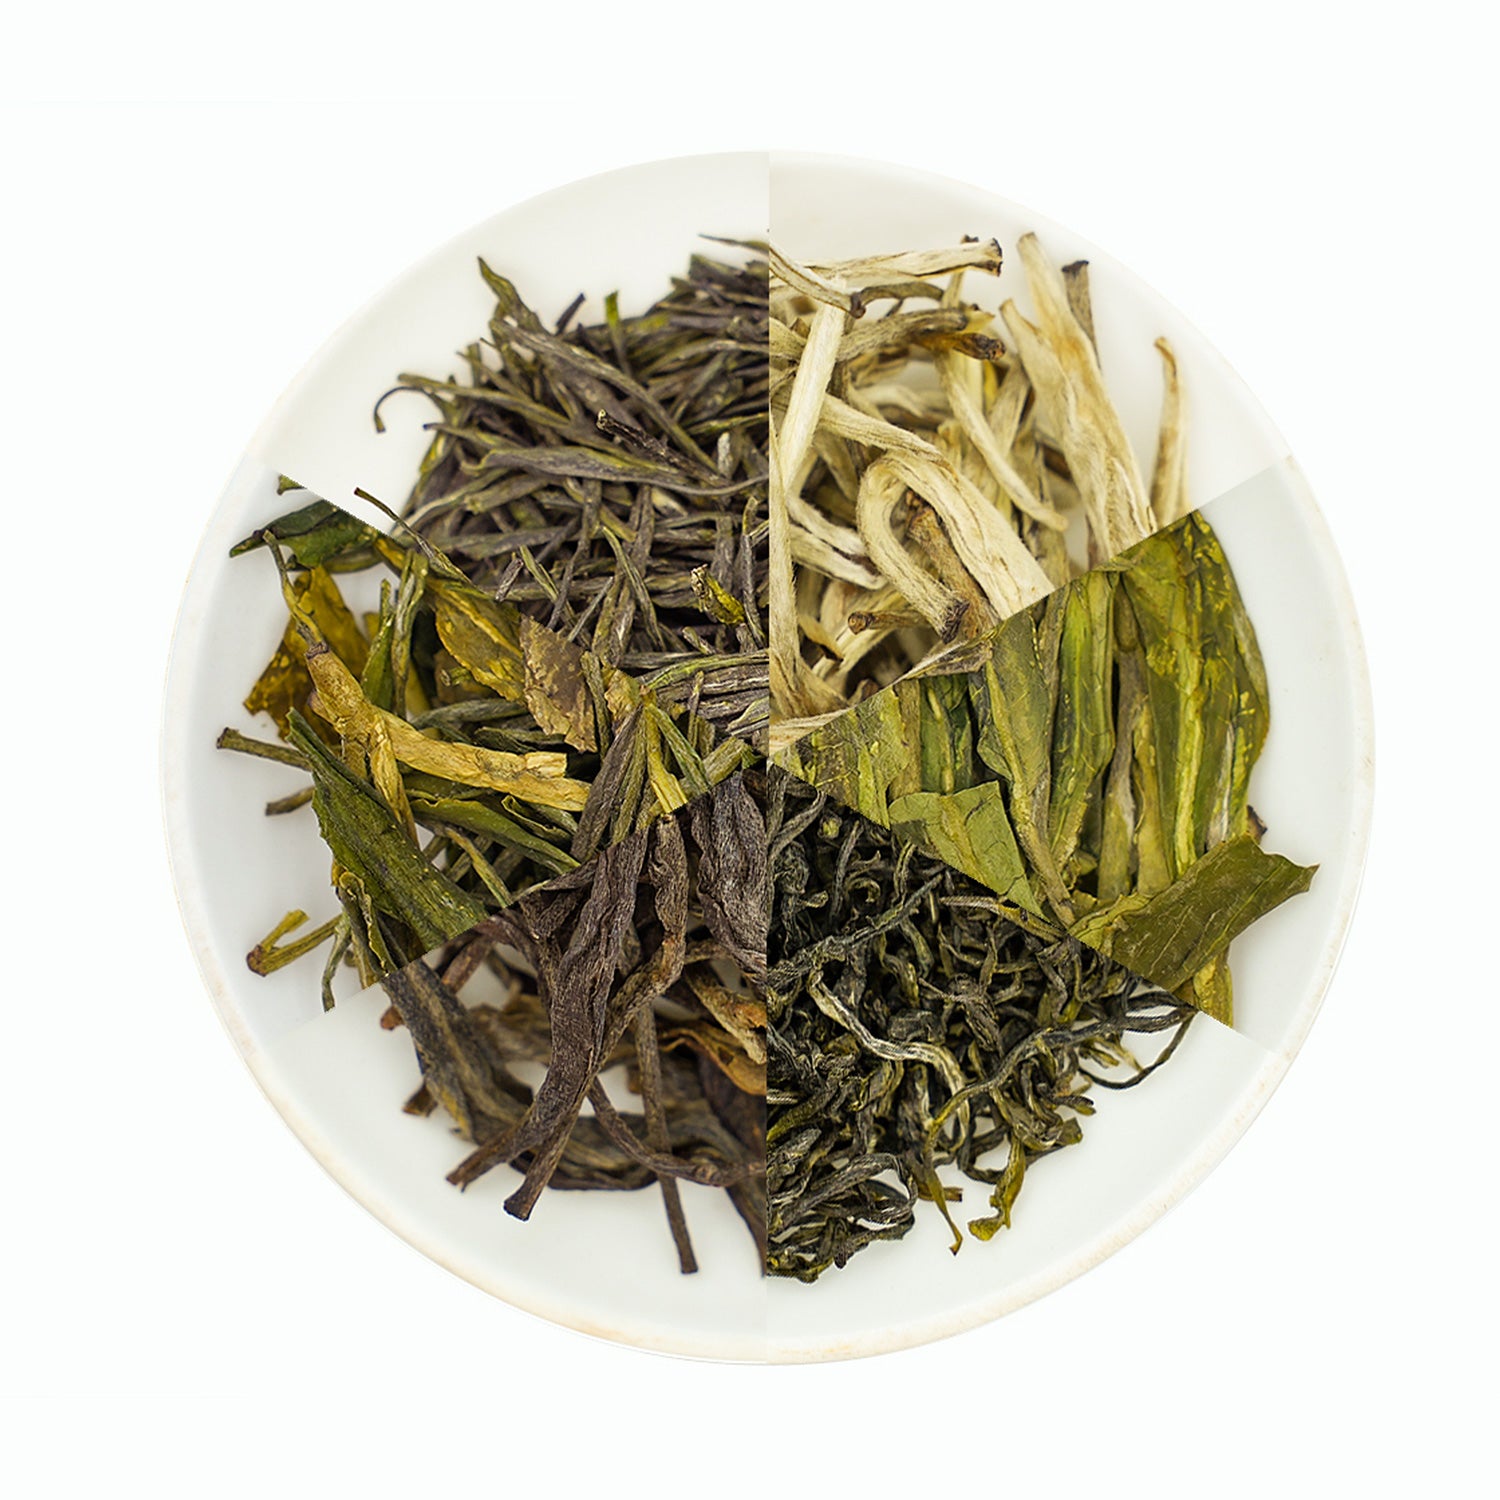 Chinese Green Tea Sampler